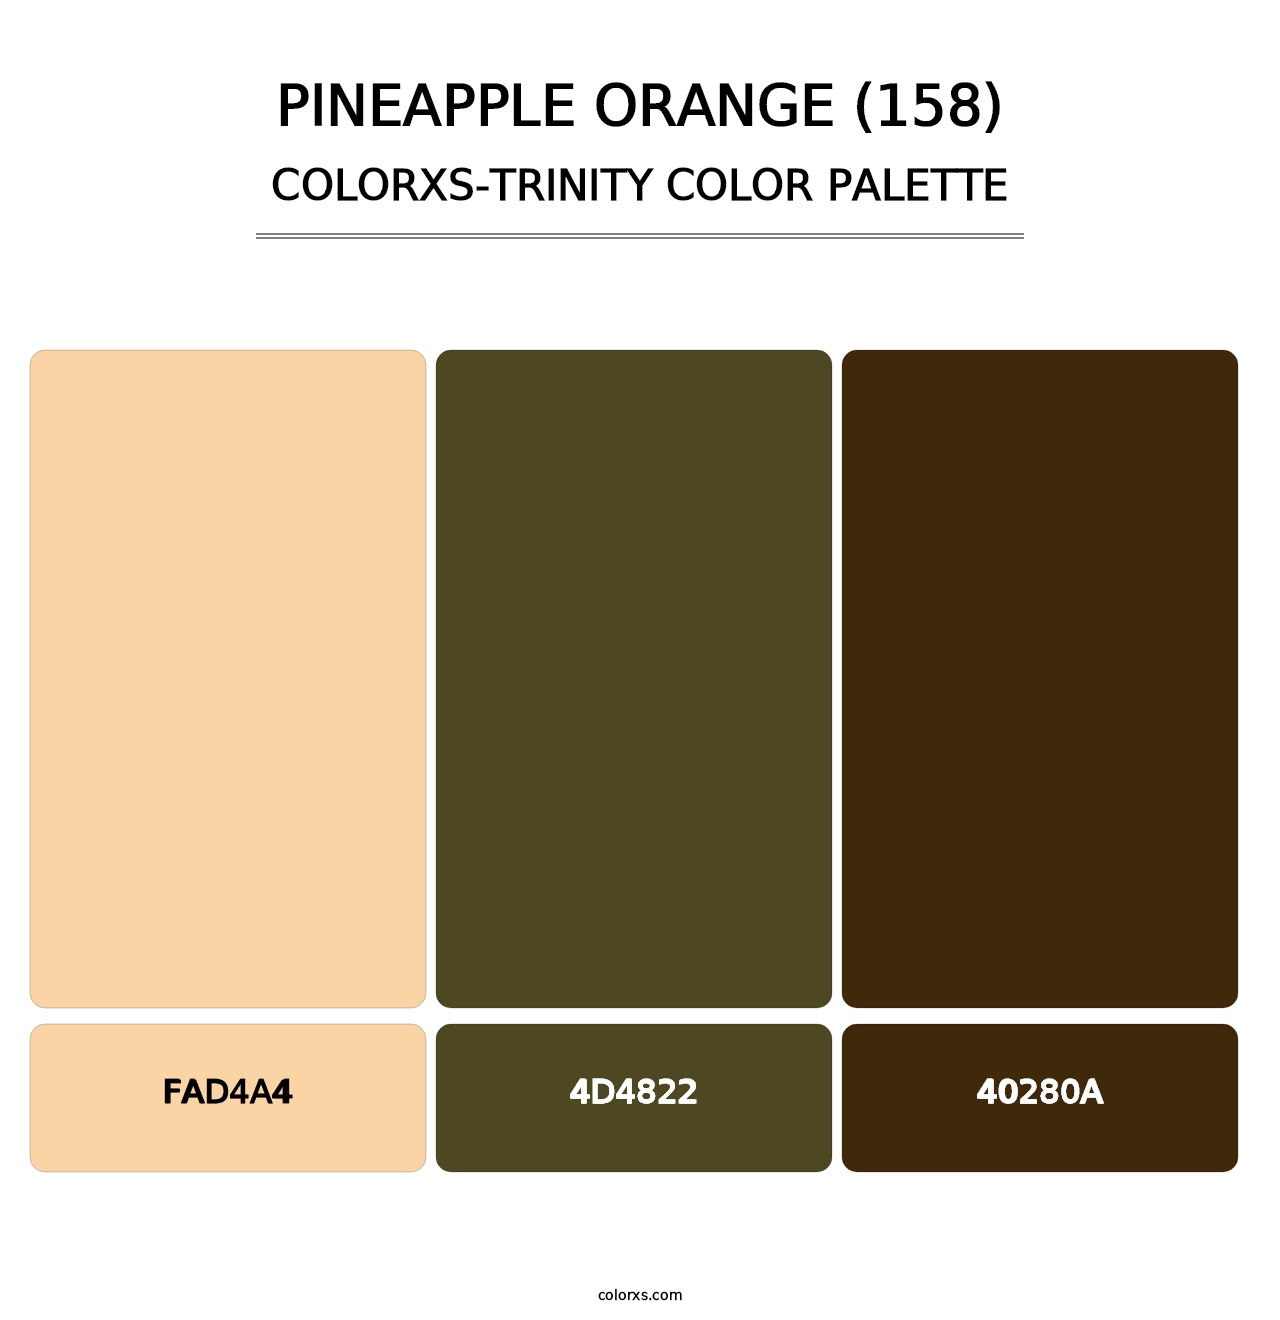 Pineapple Orange (158) - Colorxs Trinity Palette